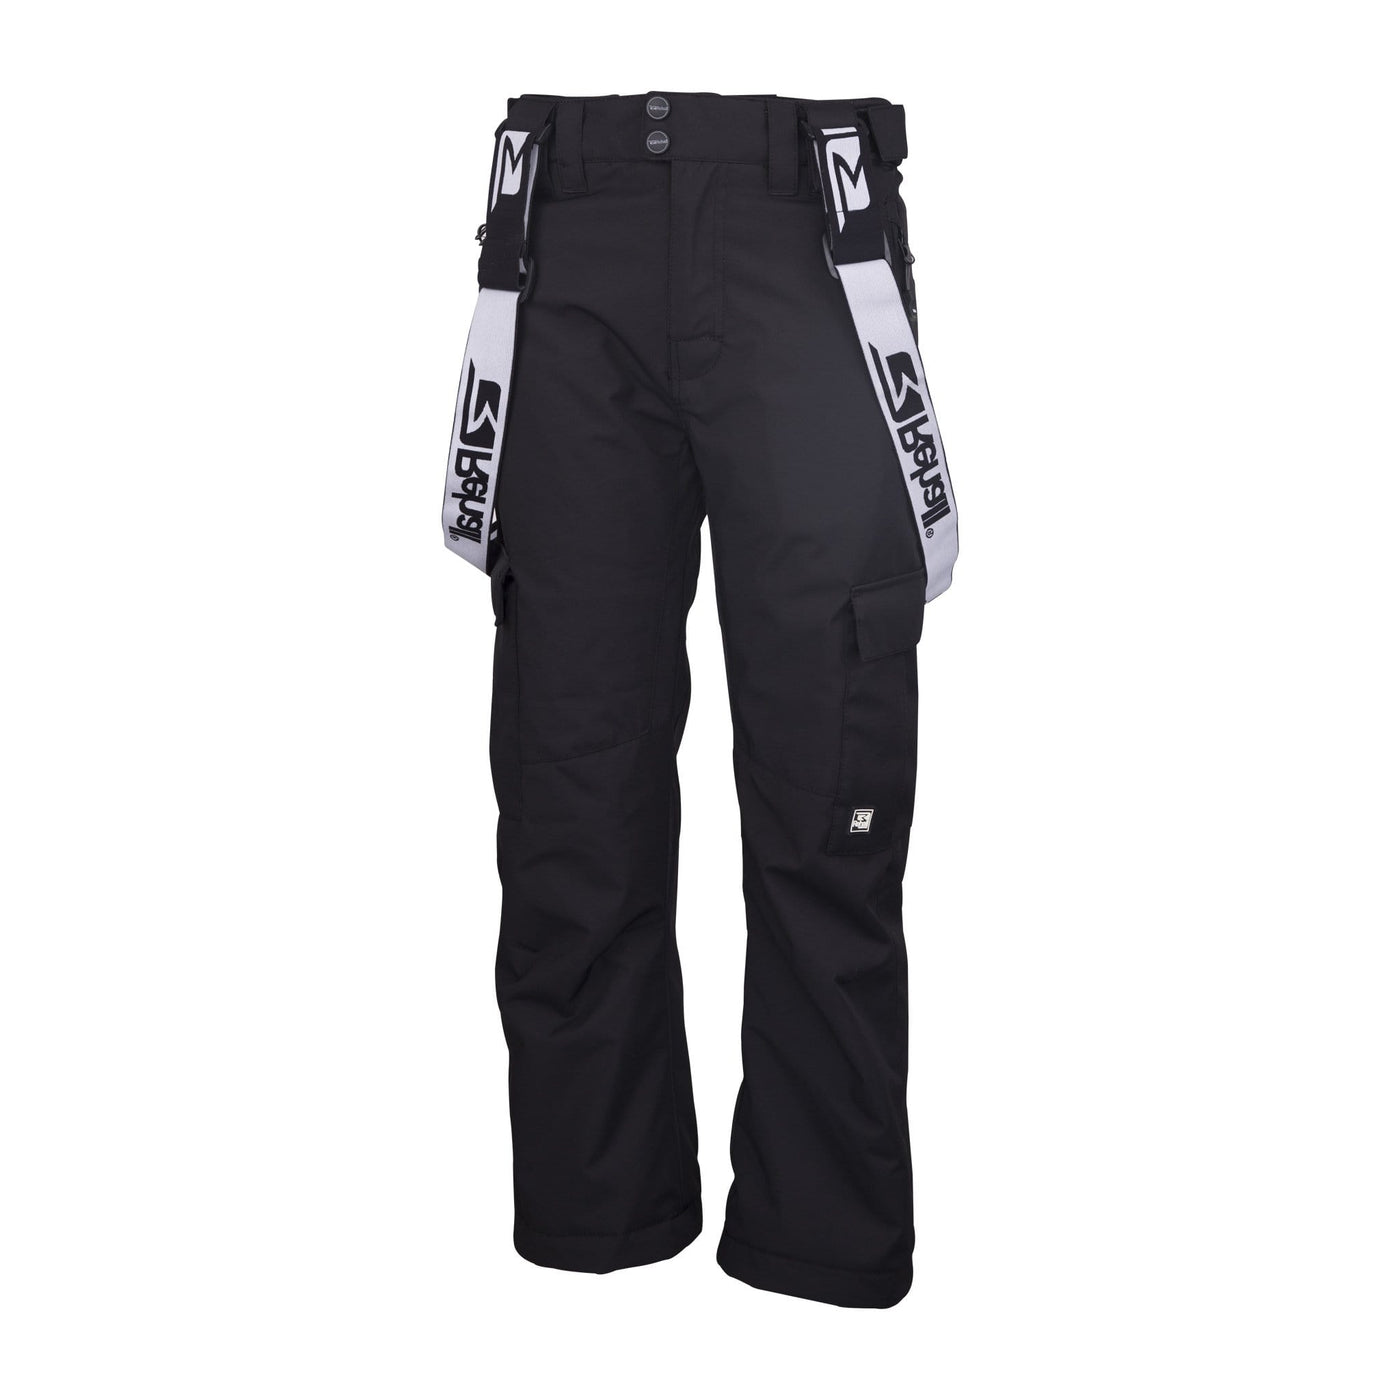 SnowKids Outerwear Pants Rehall Dizzy Jr Boys Snow Pant - Black